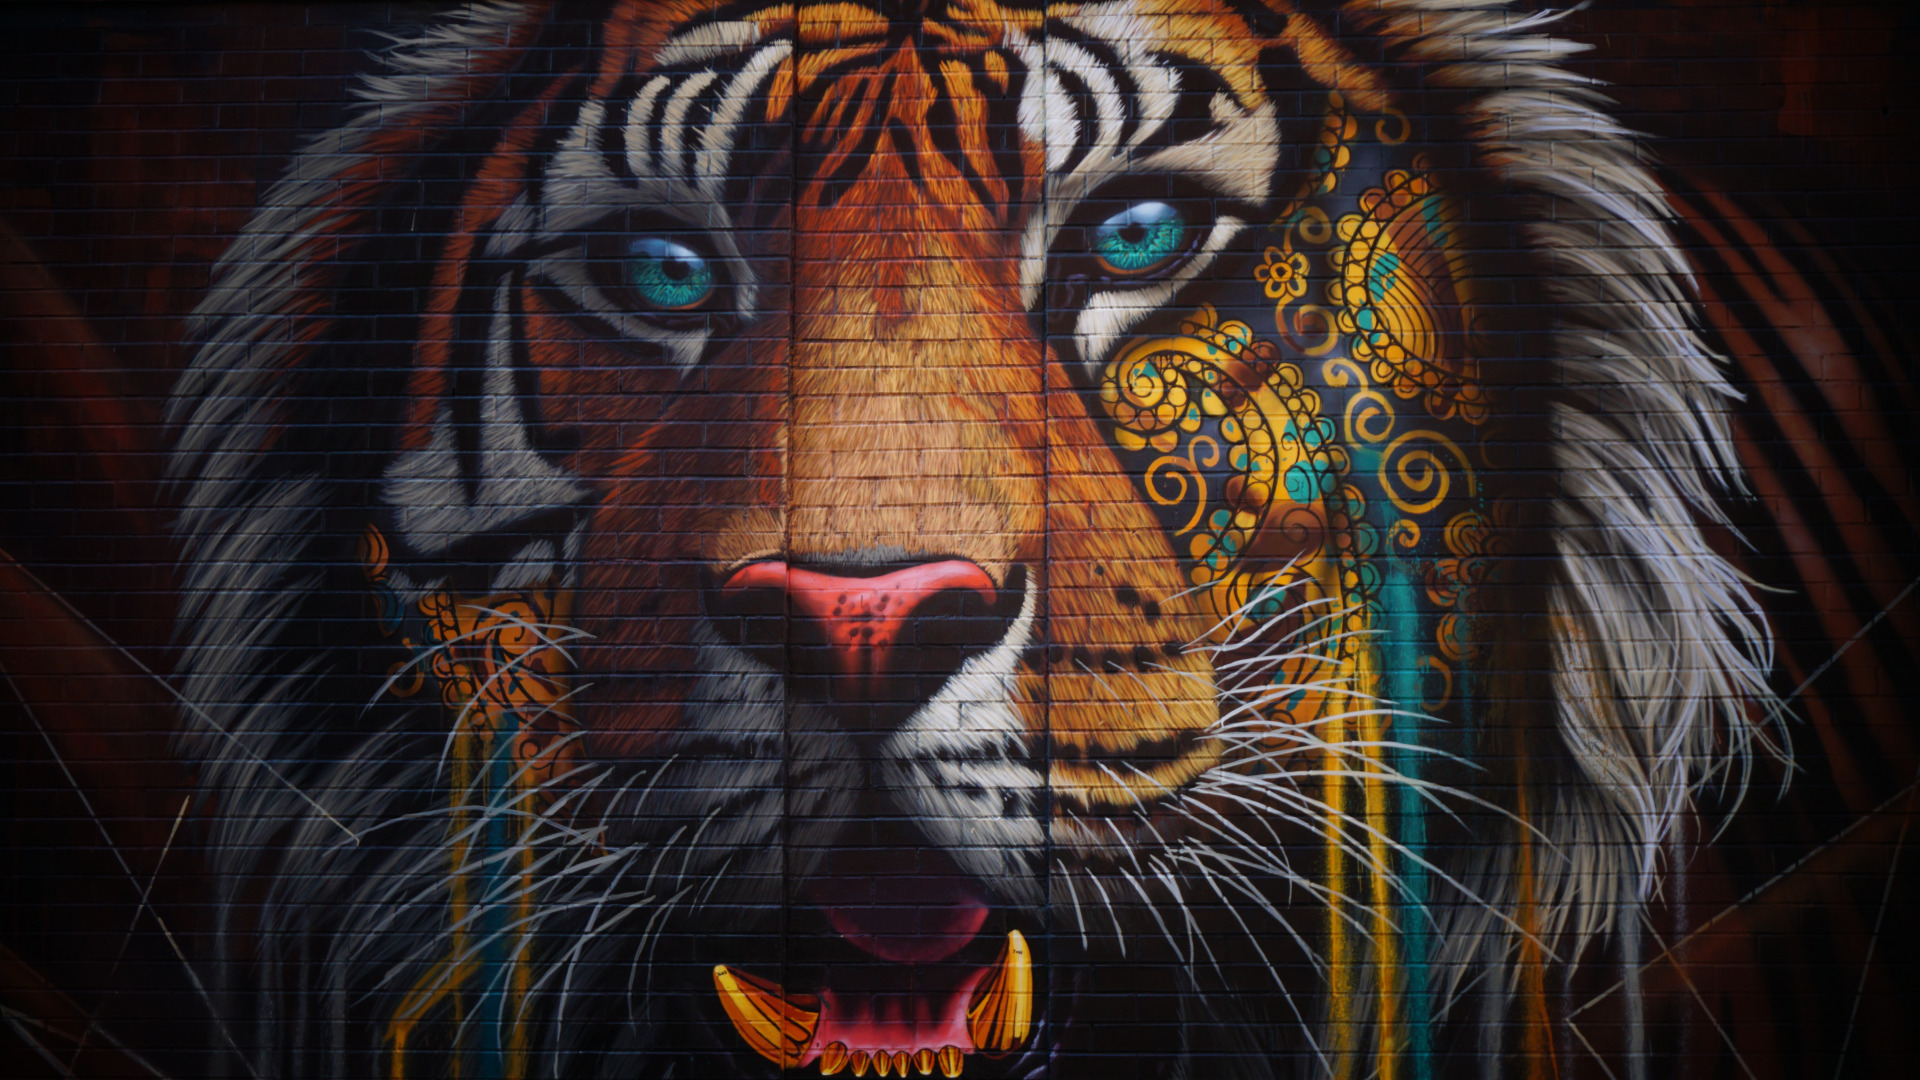 Artwork Colorful Graffiti Wall Bricks Animals Tiger Ornamented Fangs Wild Cat Street Art 1920x1080